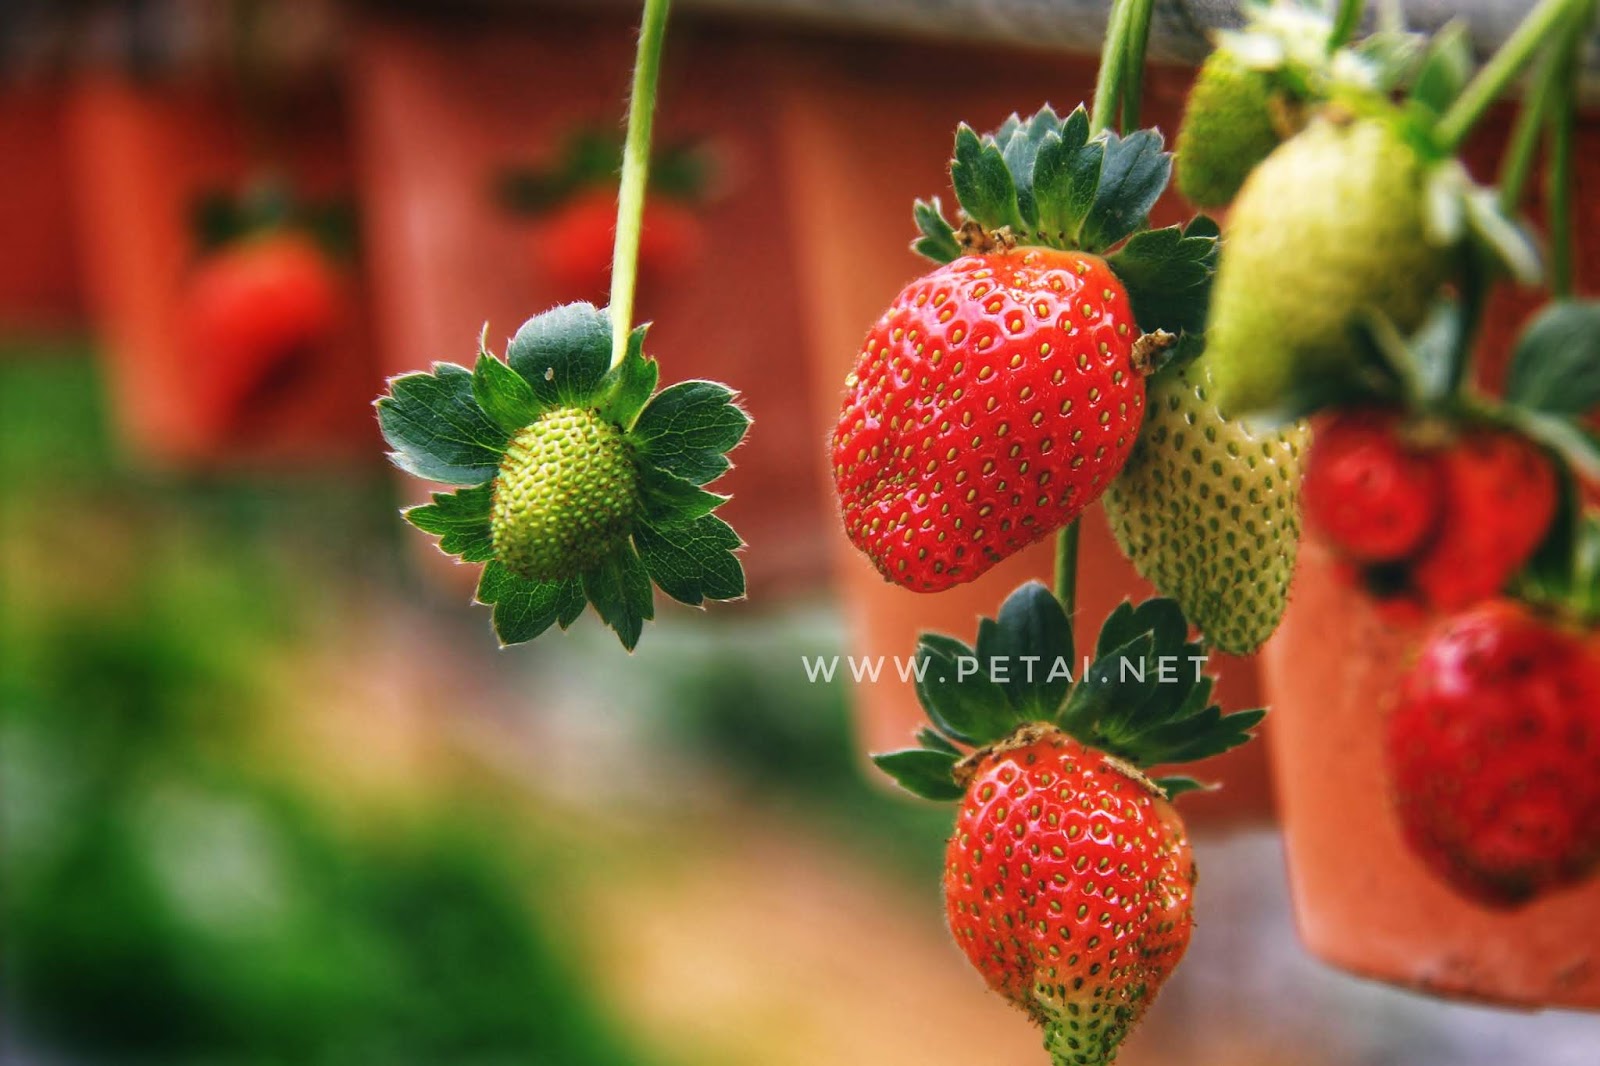 Big Red Strawberry Farm, Cameron Highlands